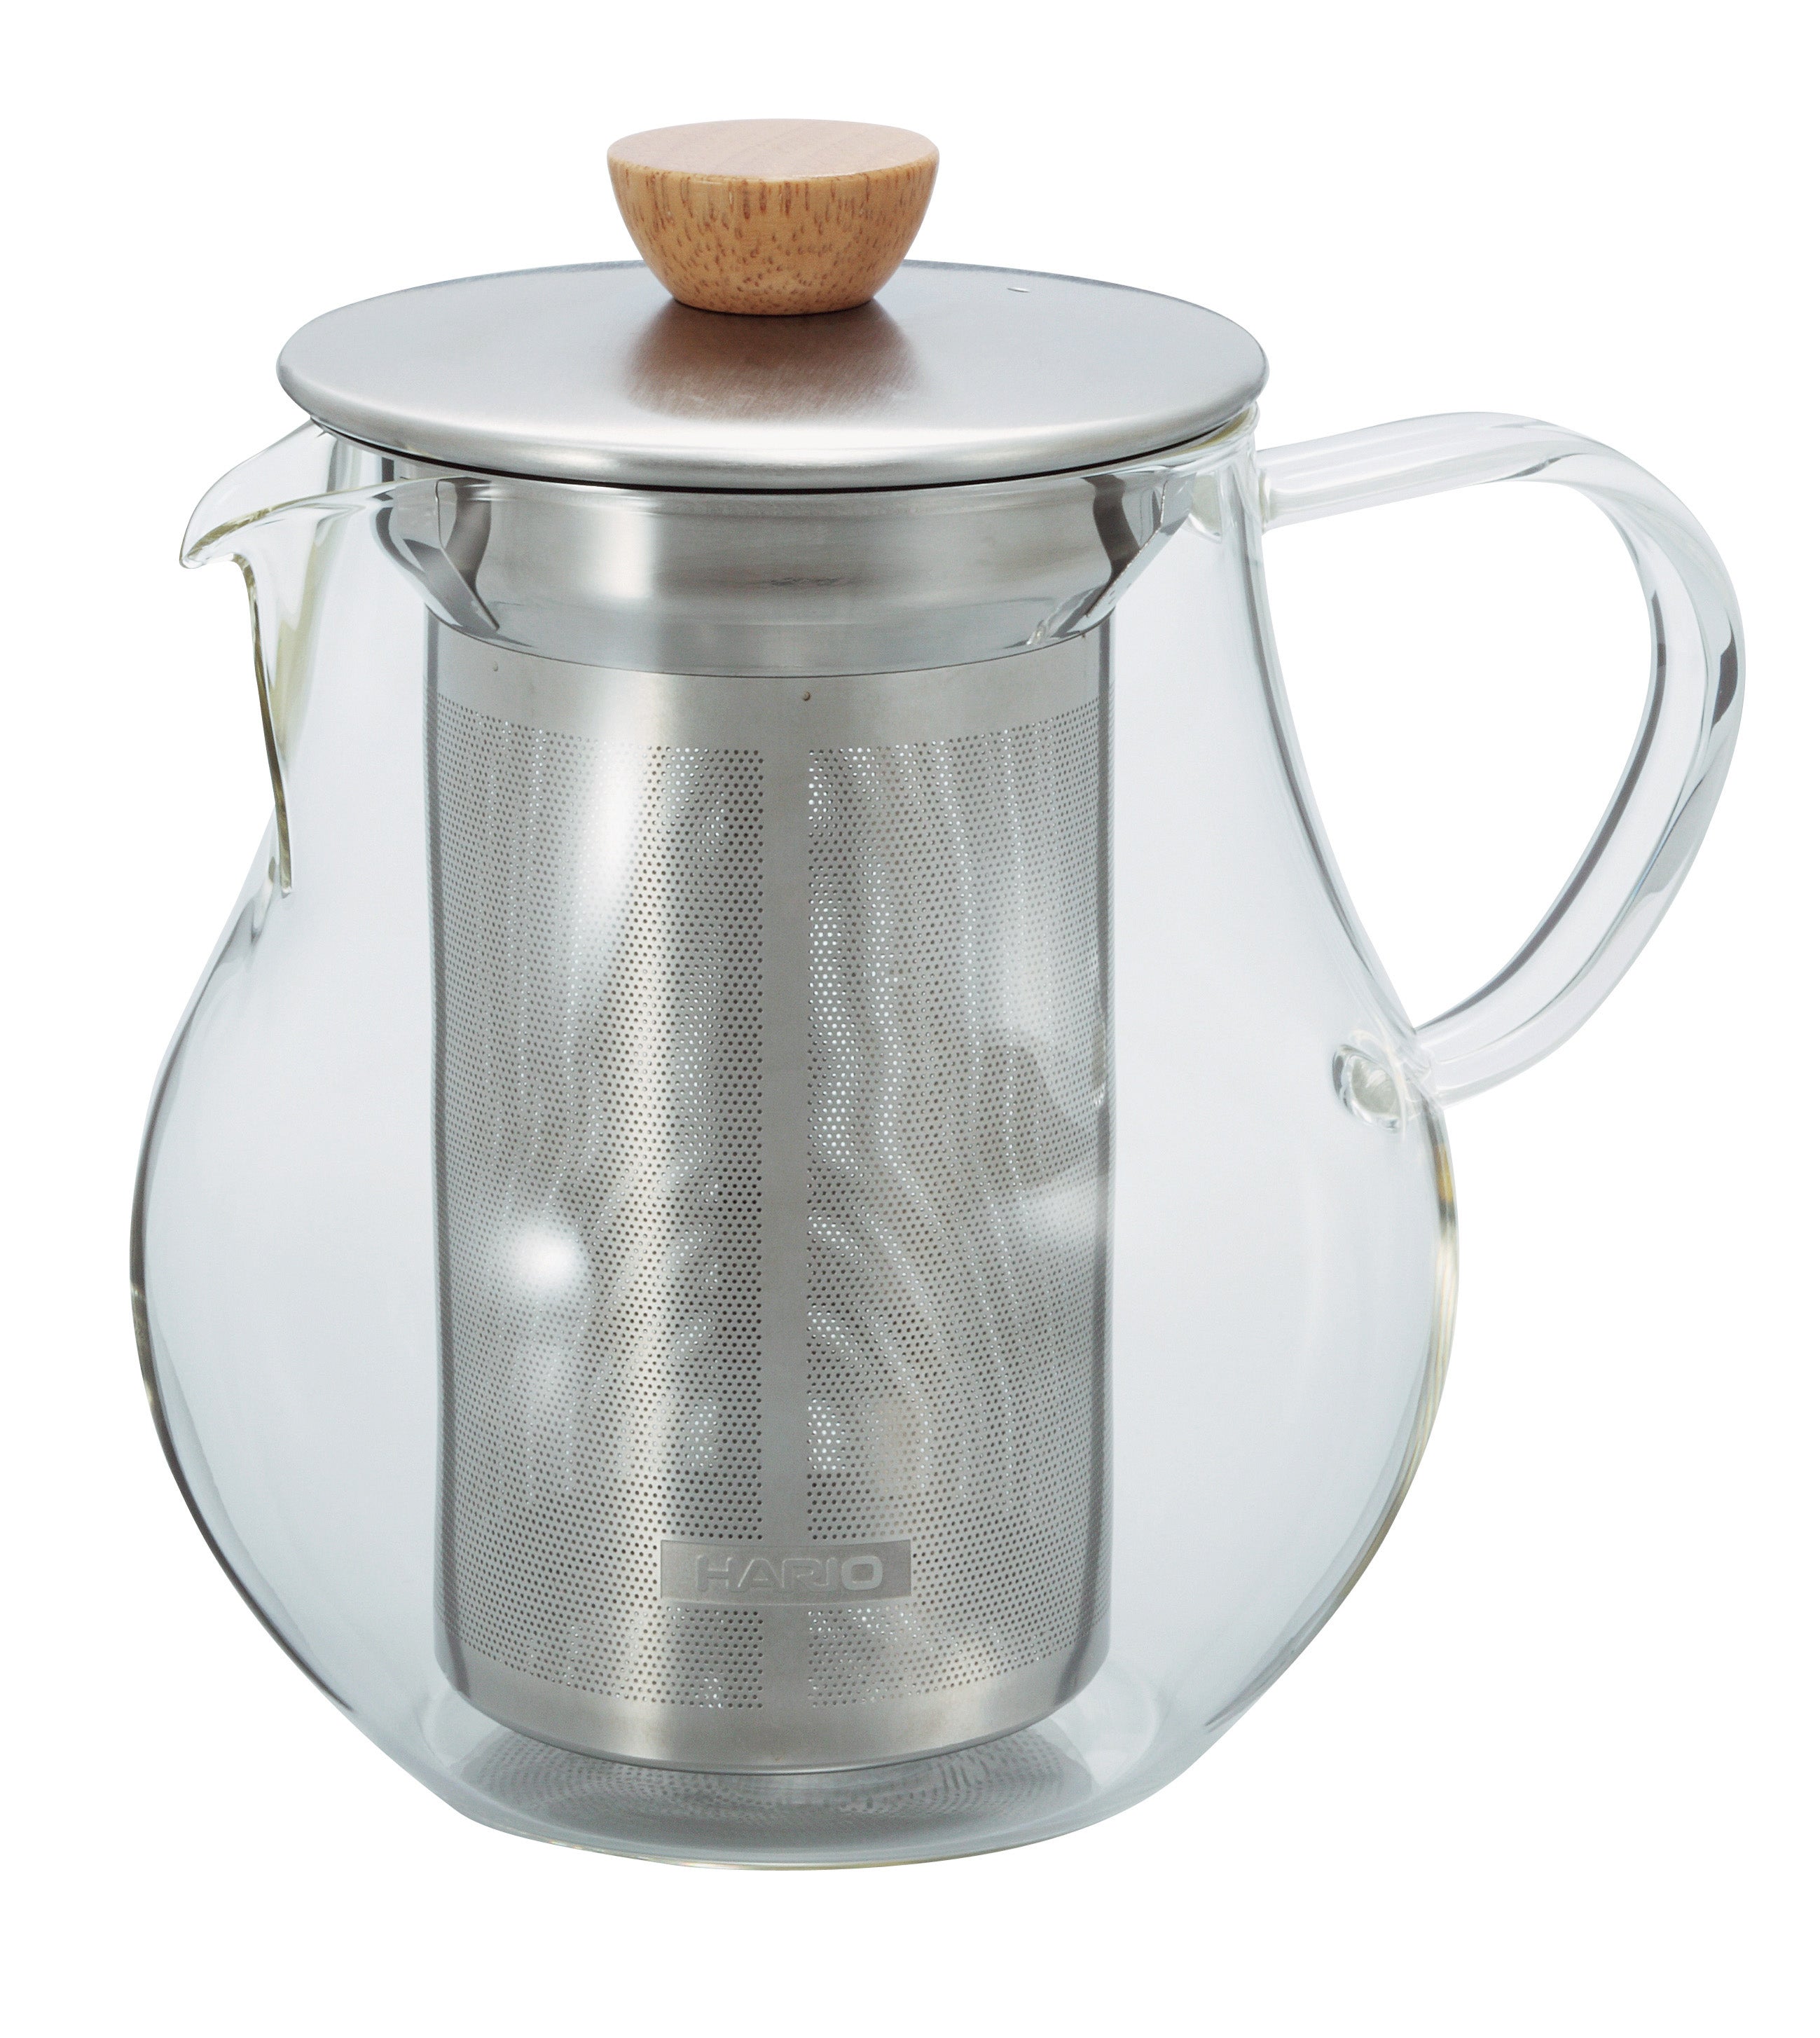 Hario tpc-70hsv tea pitcher 700ml